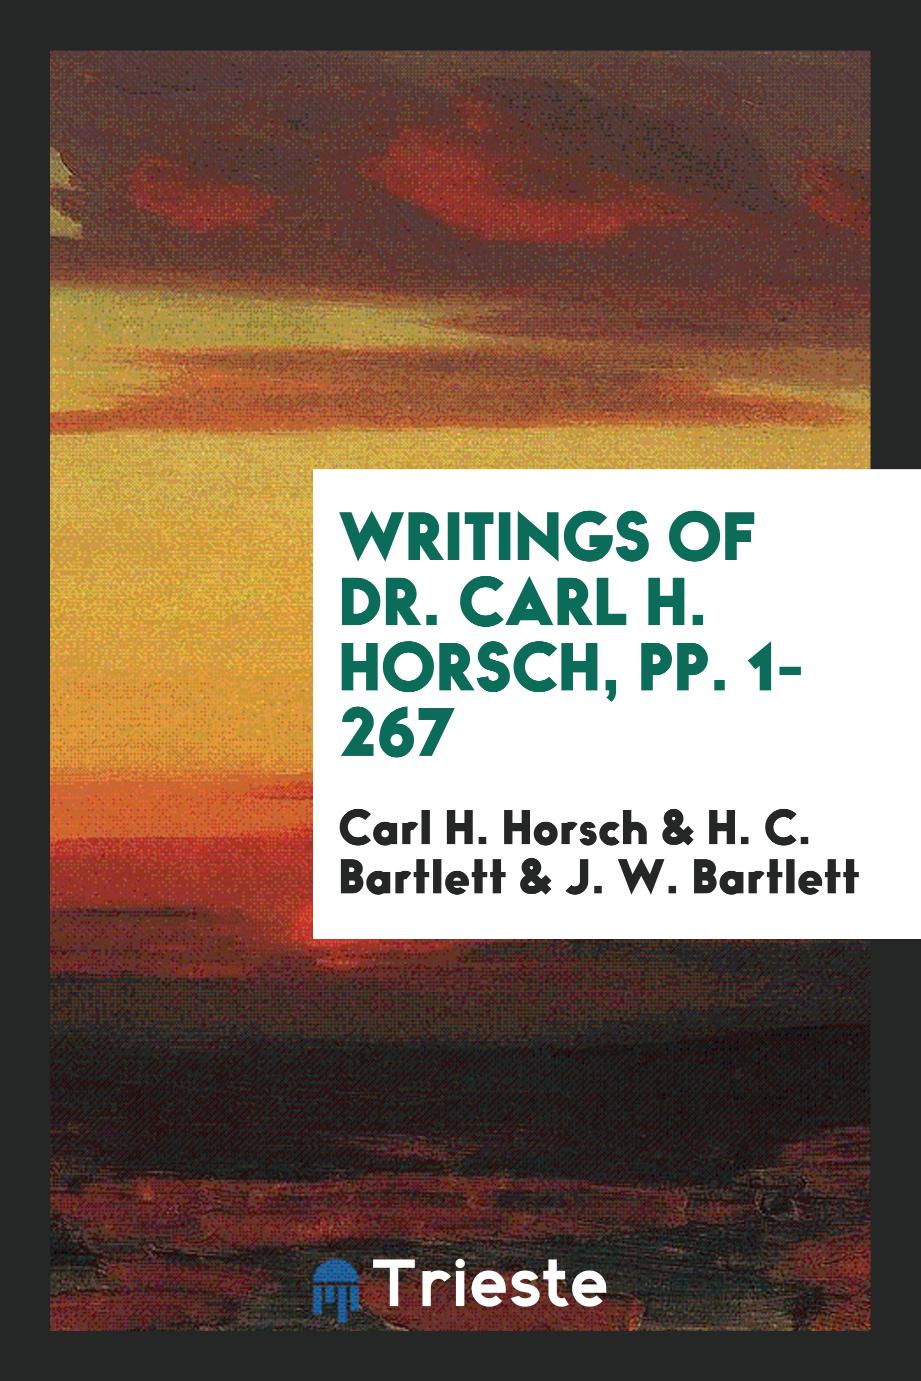 Writings of Dr. Carl H. Horsch, pp. 1-267